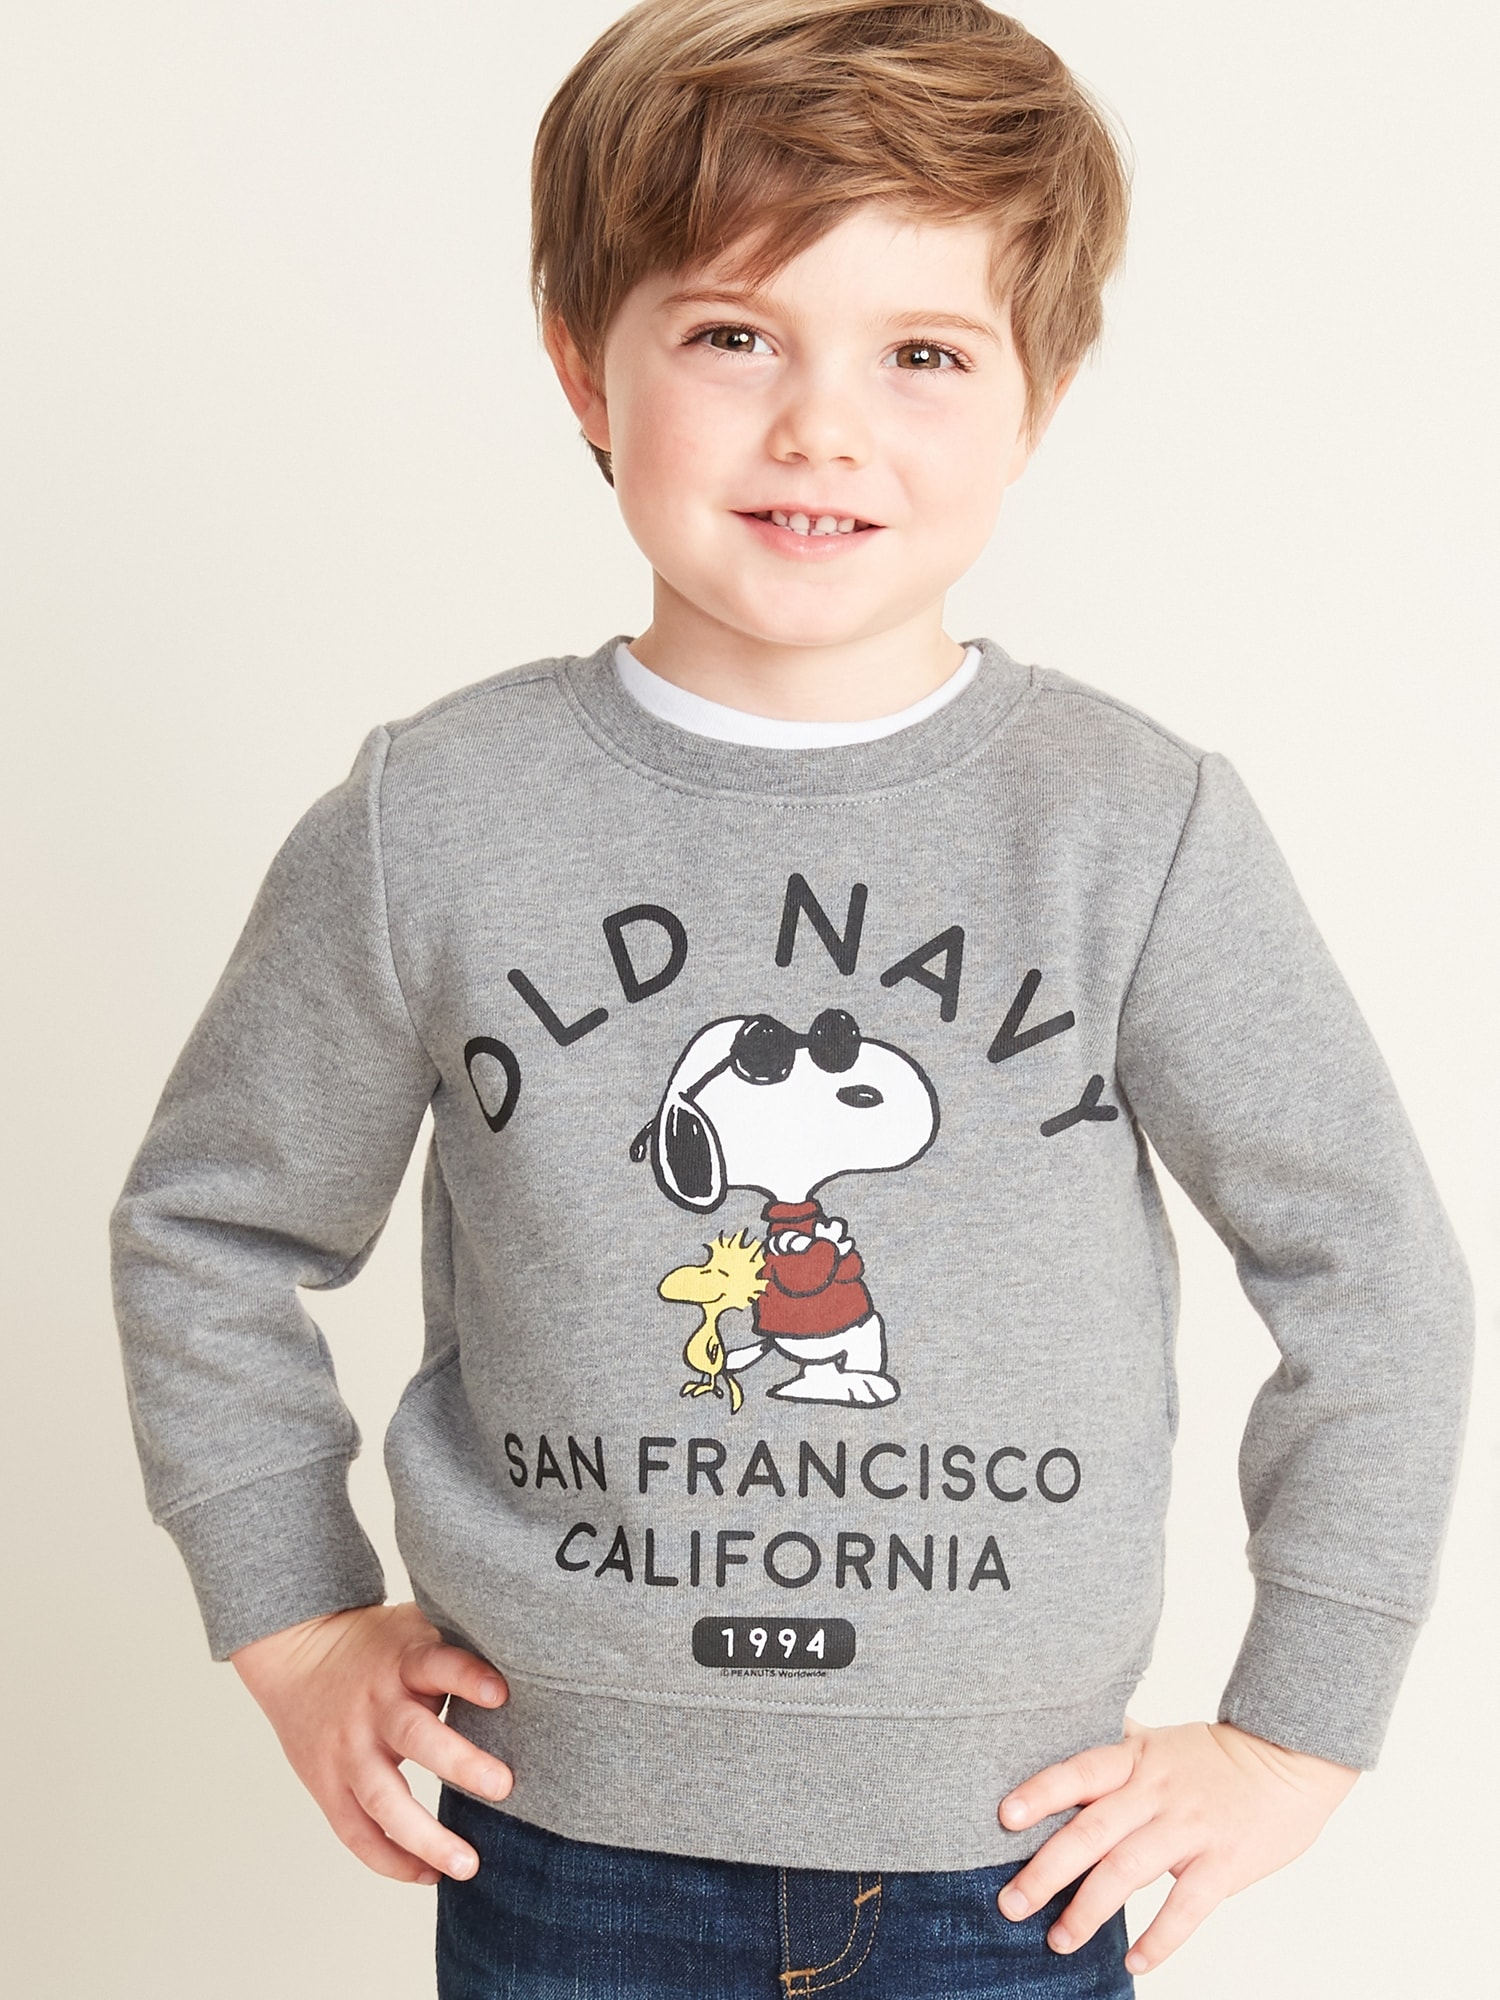 Third Street Sportswear Toddler Boy's Usn Captain Snoopy Tee